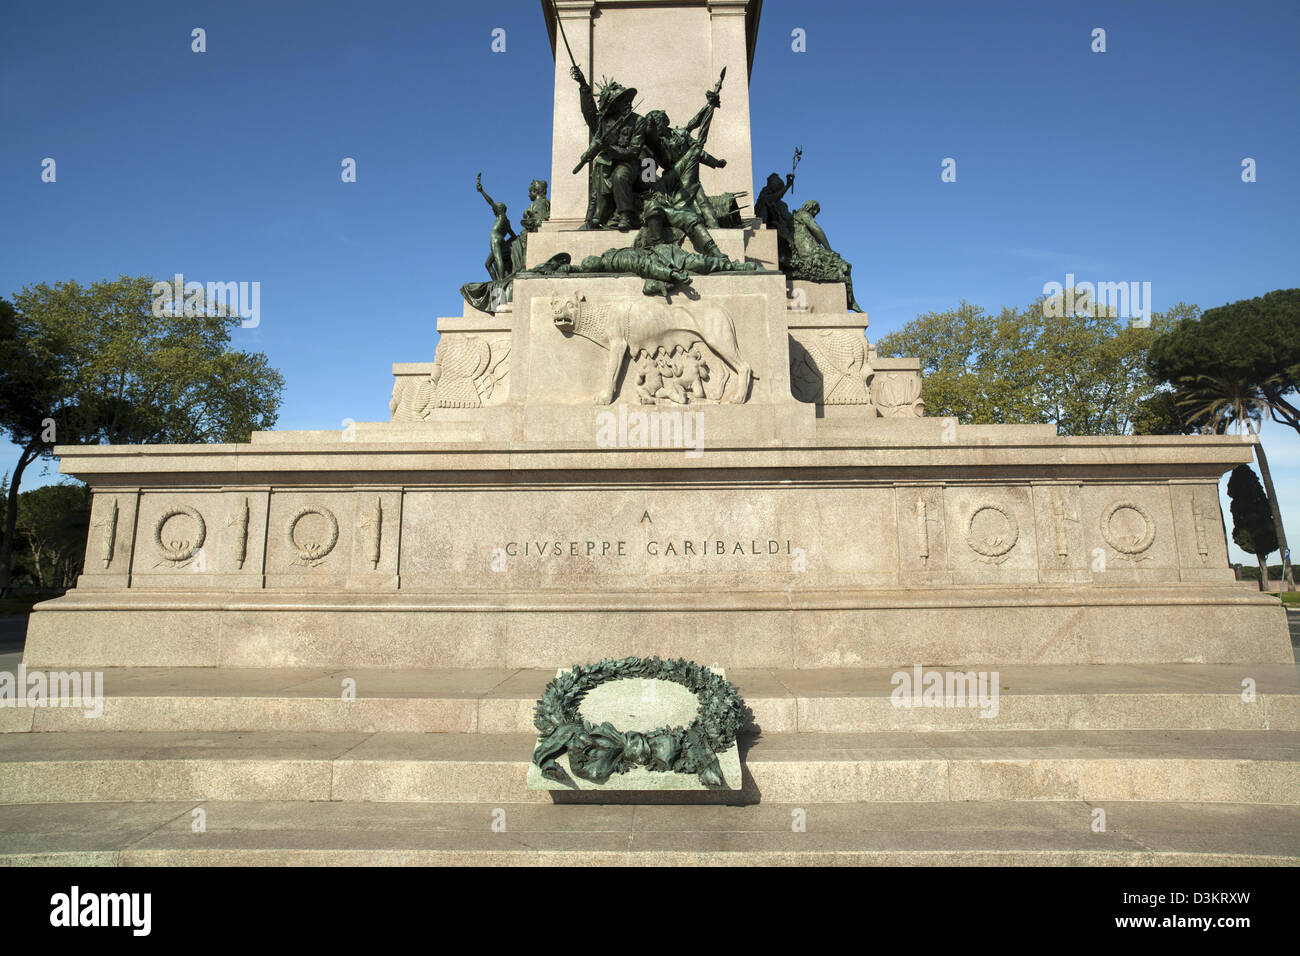 Equestrian statue monument to Giuseppe Garibaldi on Janiculum Hill overlooking Rome Stock Photo